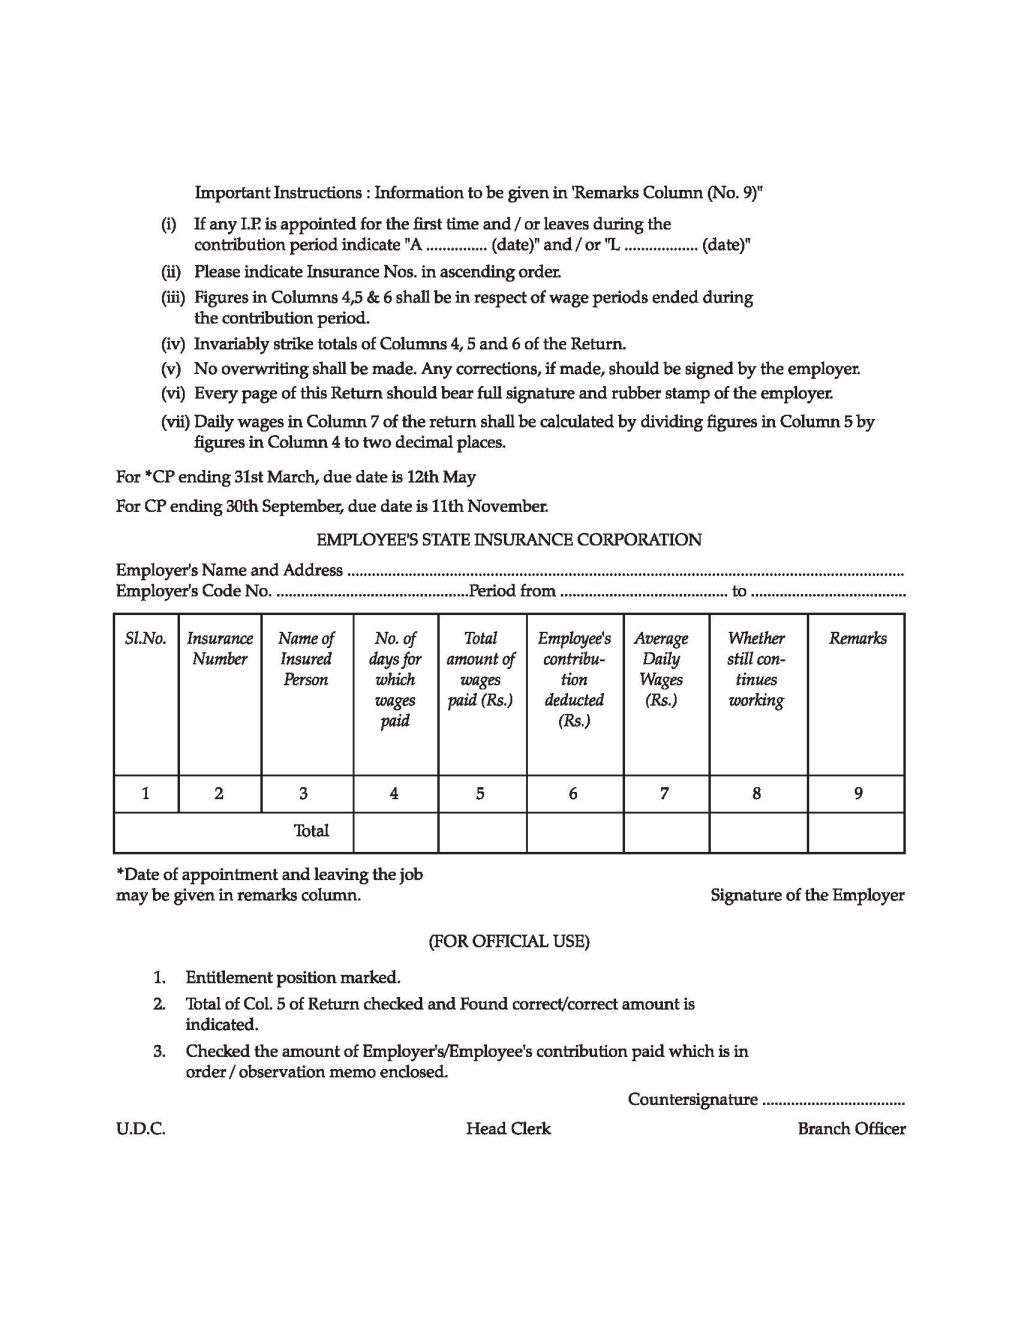 esic form 7b pdf free download